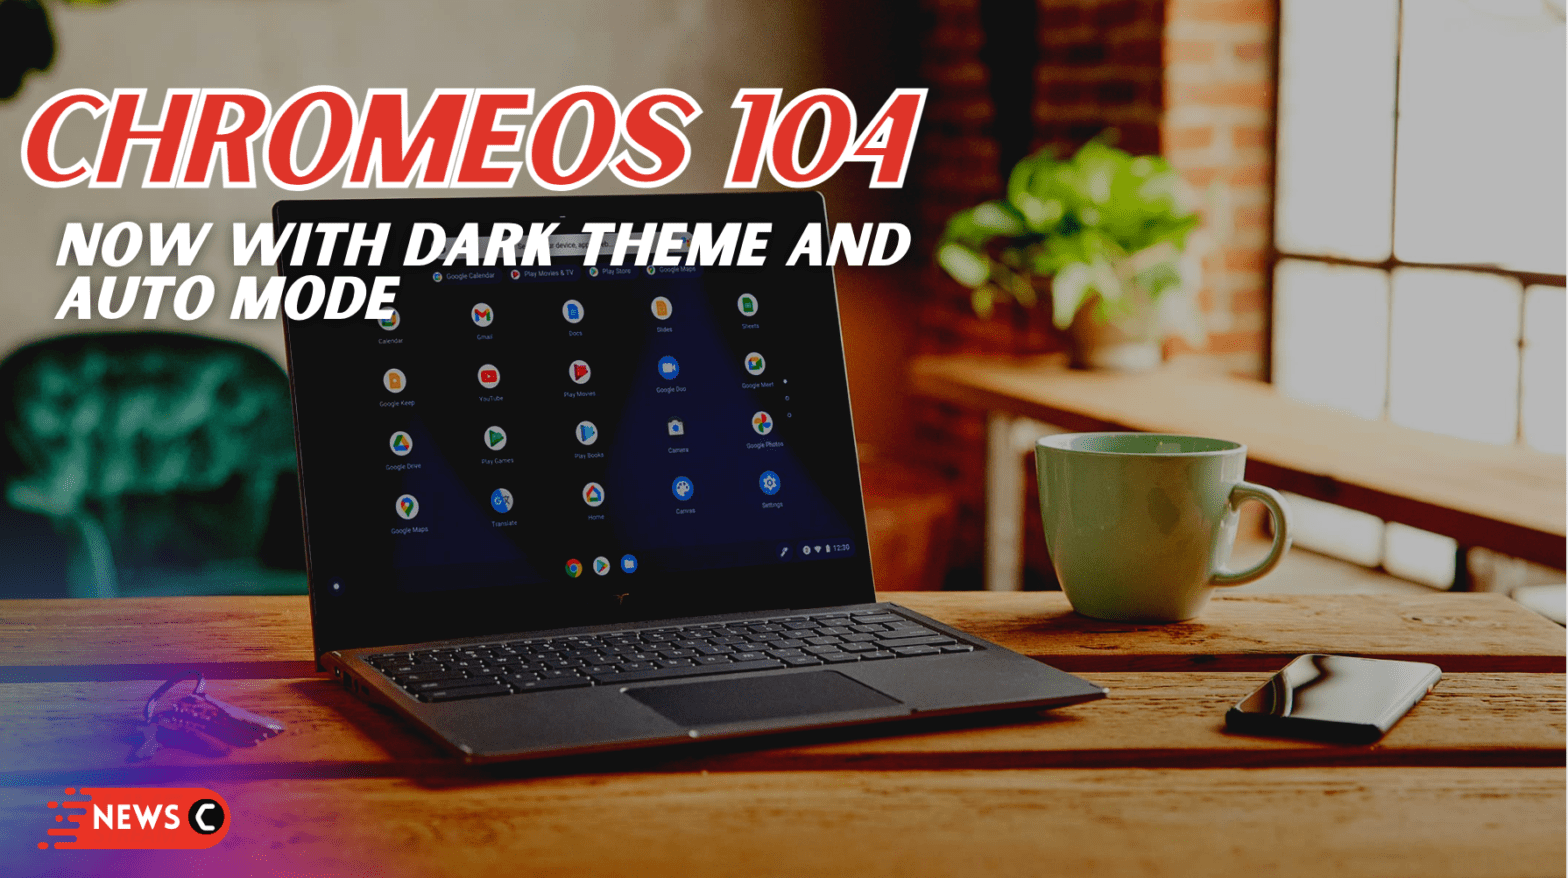 ChromeOS 104 Embraces Dark Theme And Auto Mode. Officially